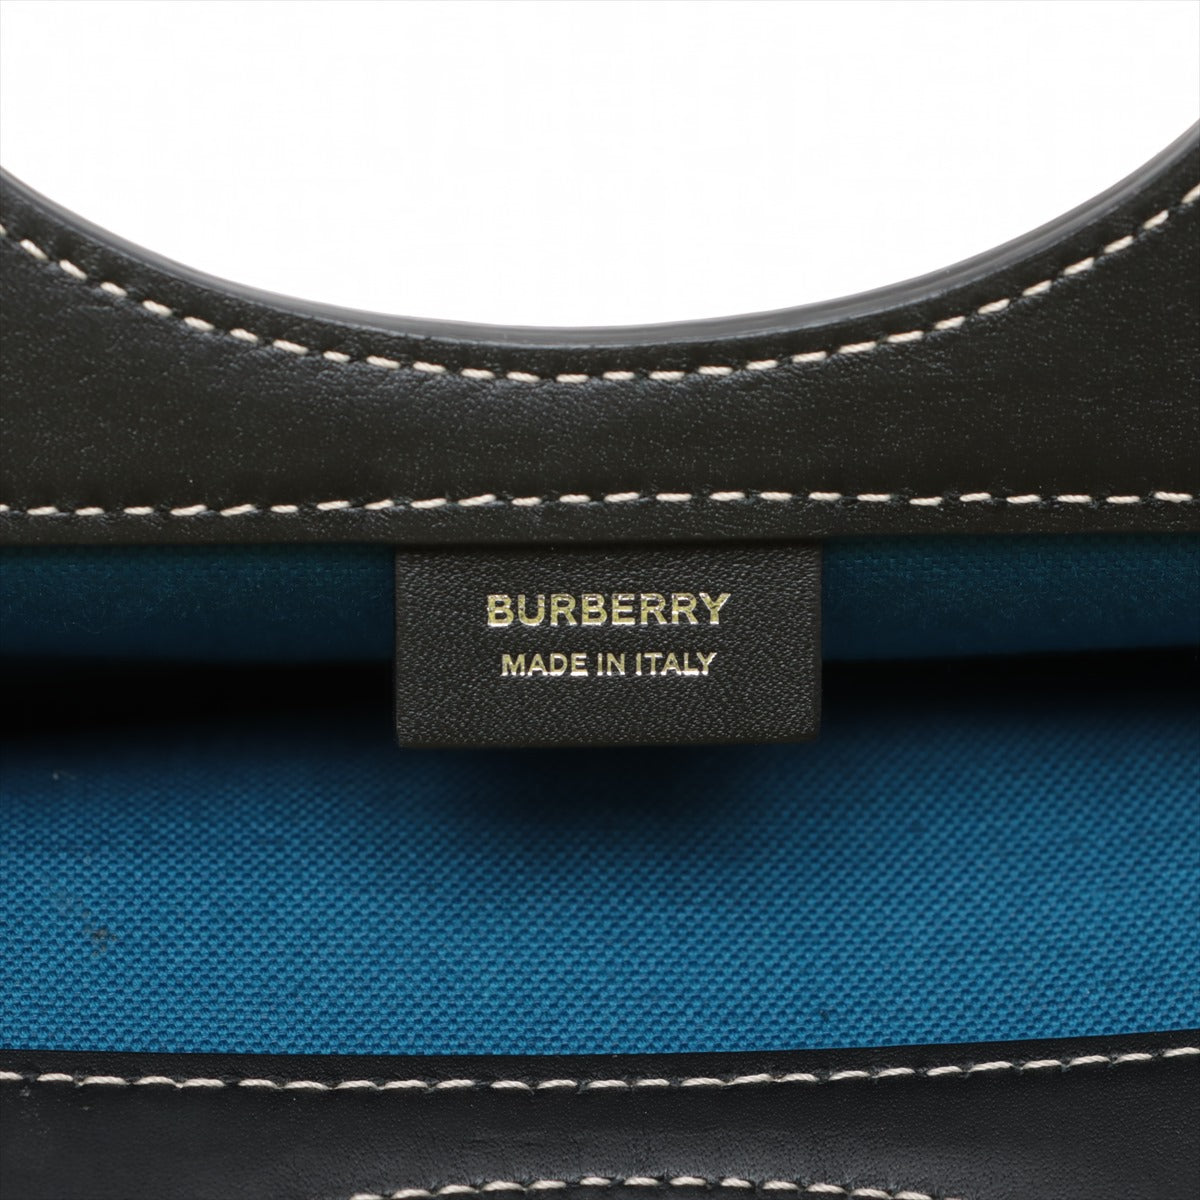 Burberry 徽標帆布 x 皮革 2WAY 手提包藍色 x 黑色 barbary